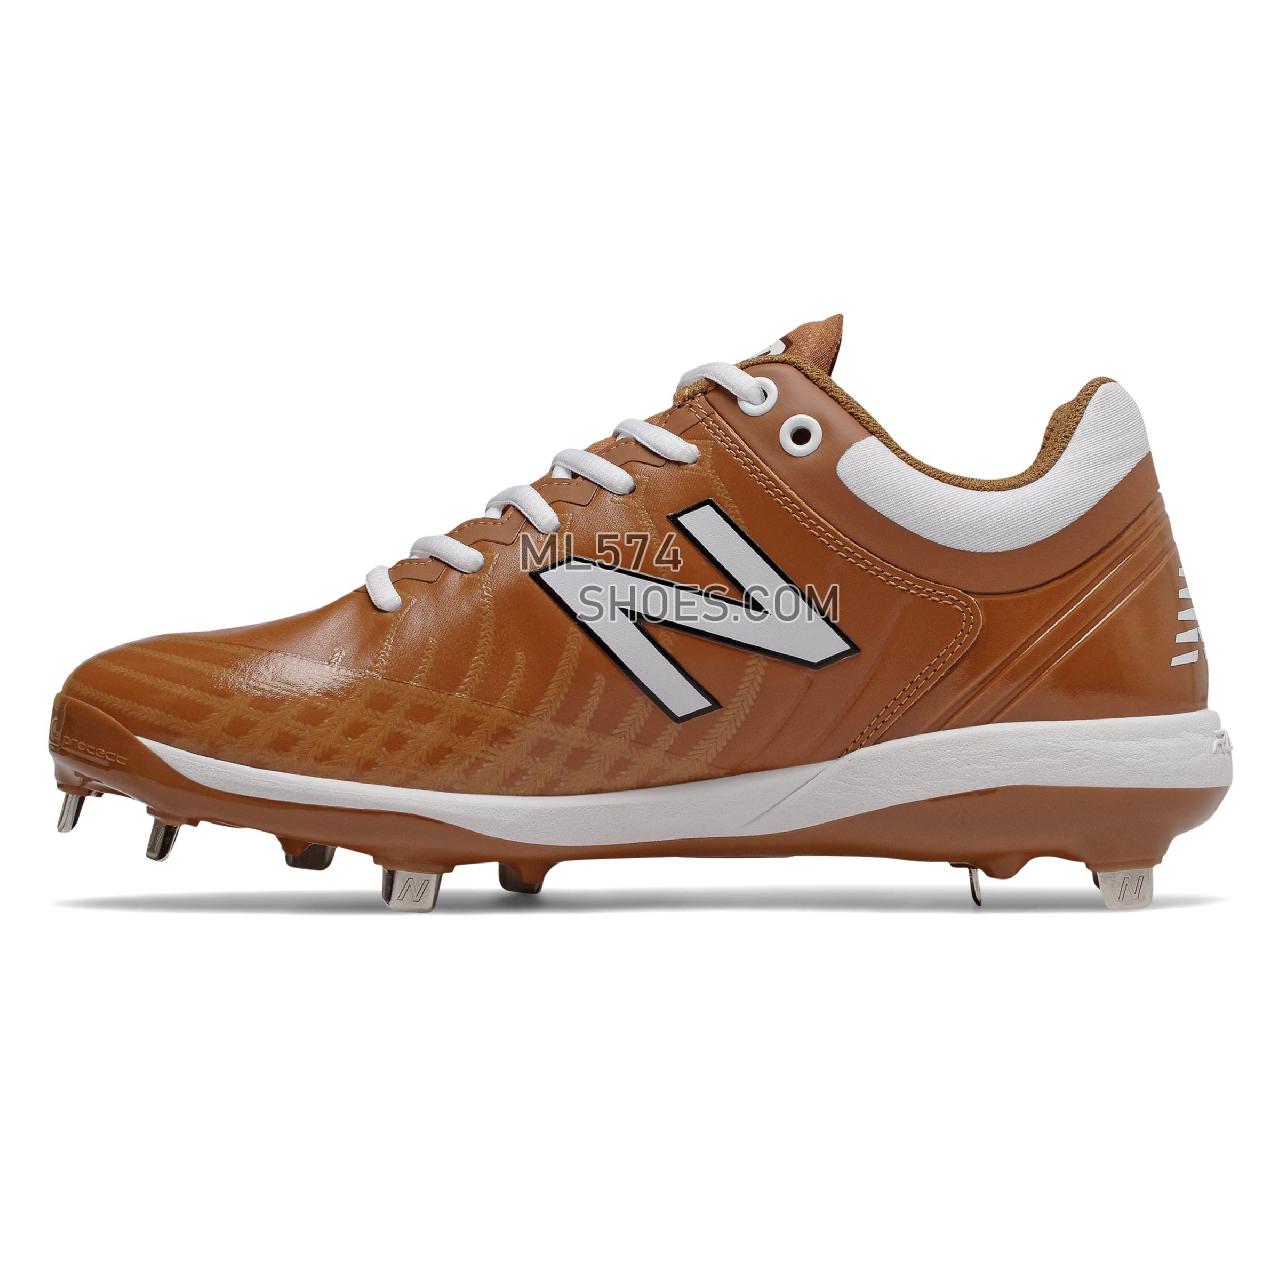 New Balance 4040v5 Metal - Men's Baseball Turf - Burnt Orange with White - L4040TO5